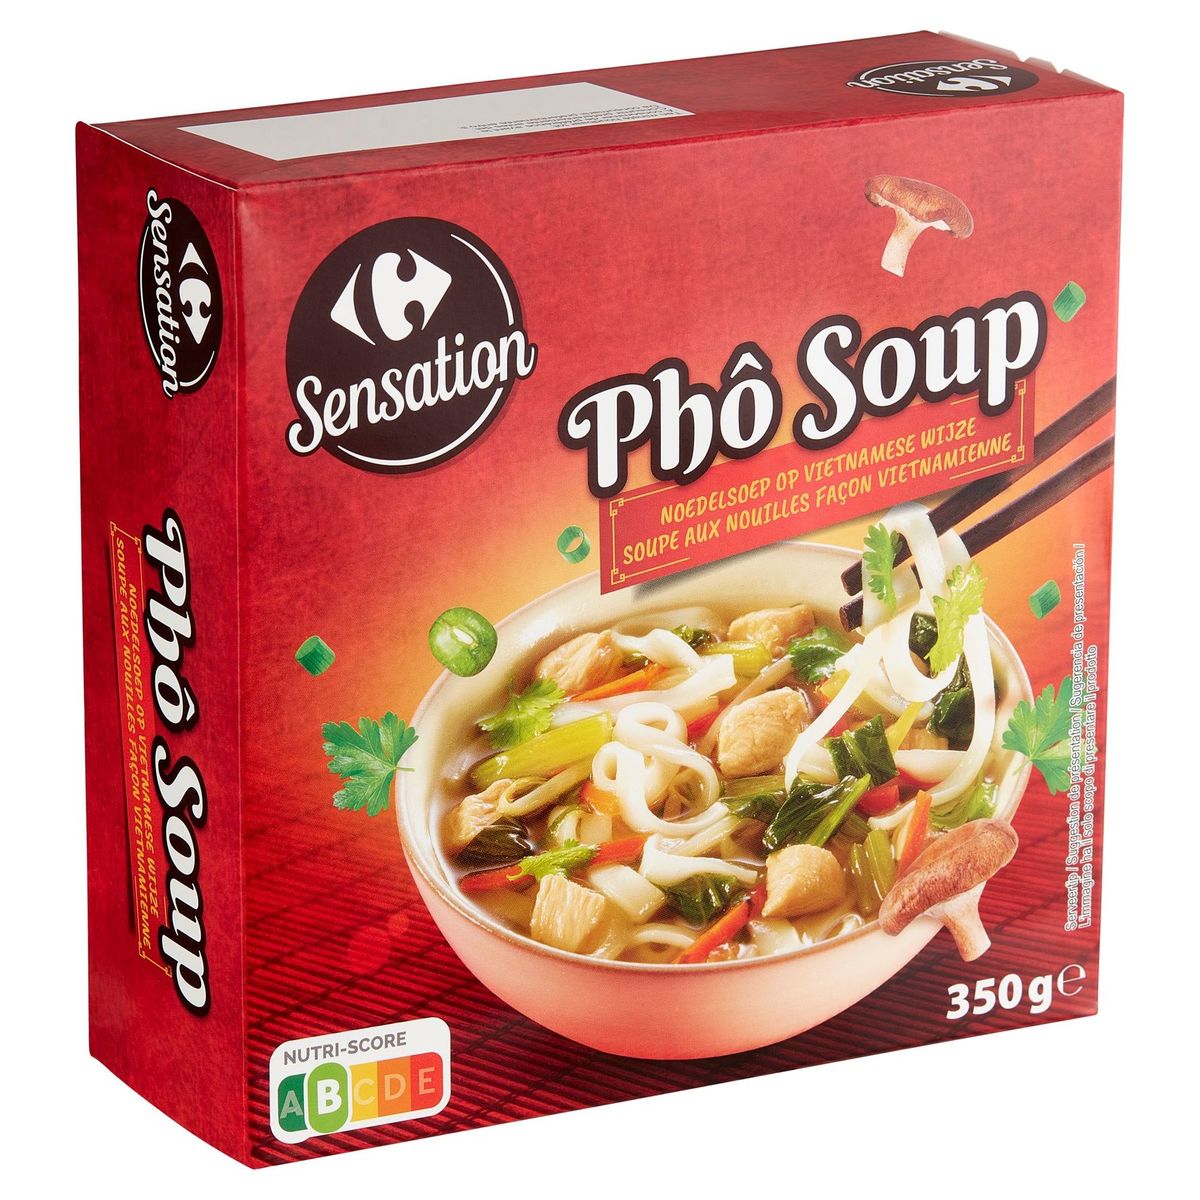 Carrefour Sensation Phô Soup Noedelsoep op Vietnamese Wijze 350 g